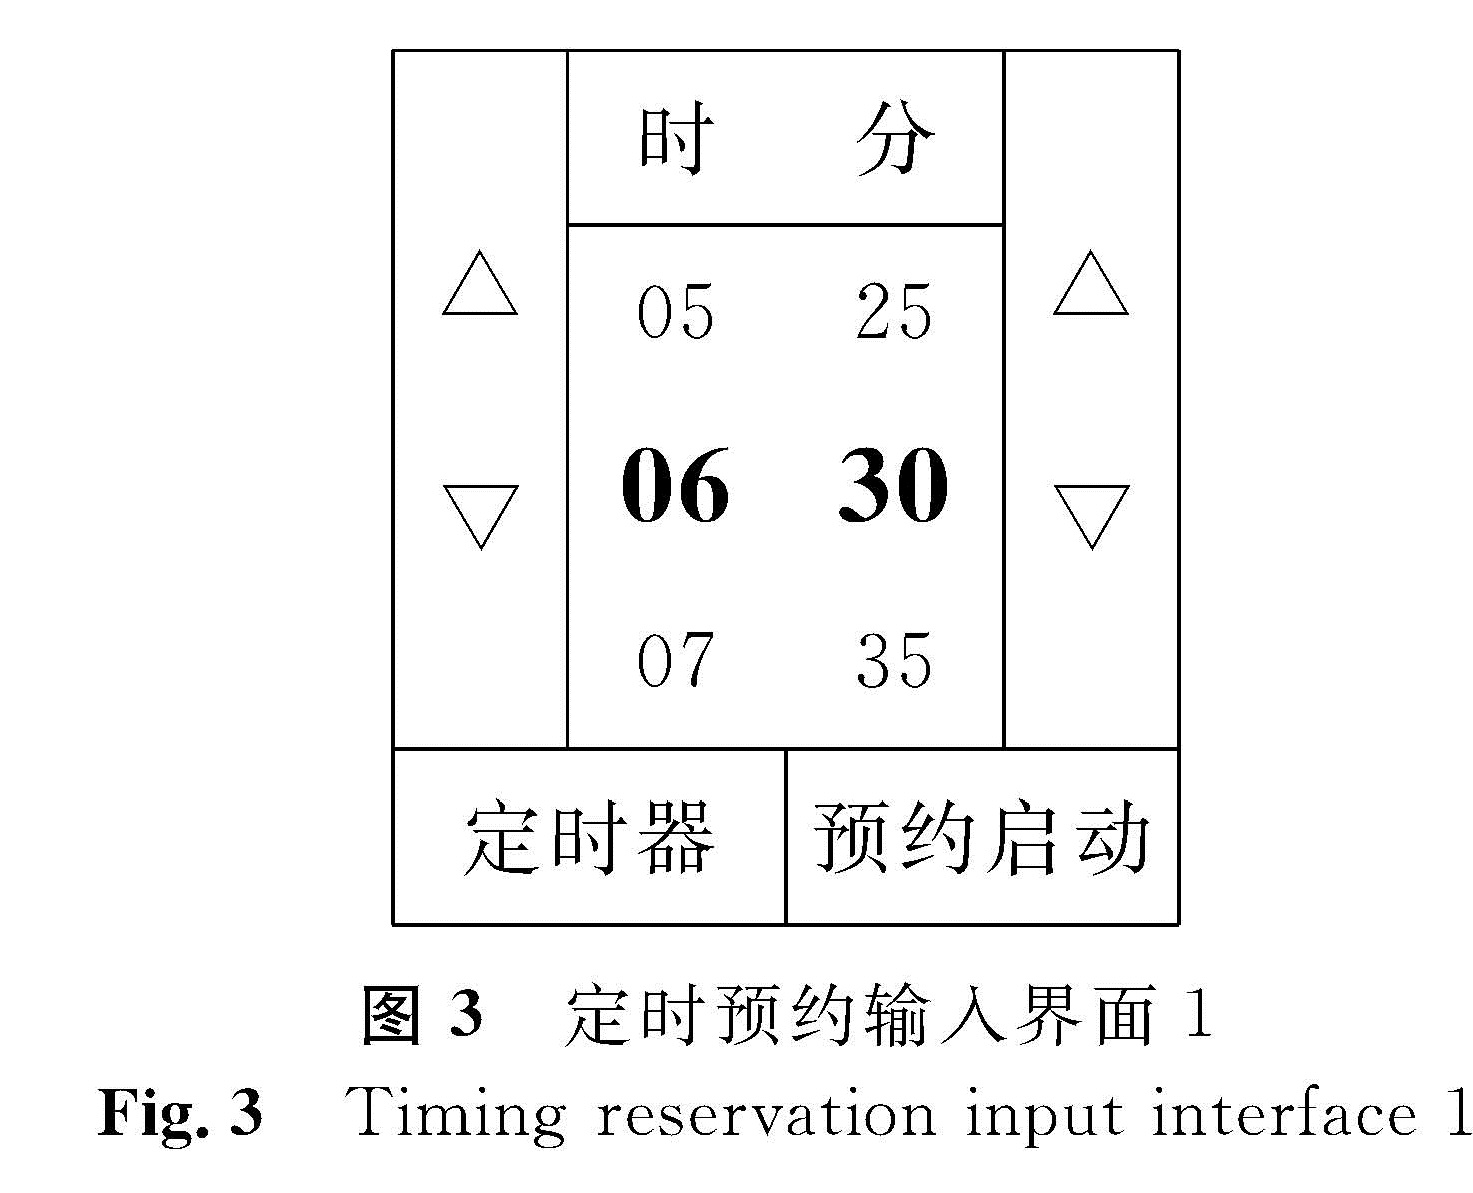 图3 定时预约输入界面1<br/>Fig.3 Timing reservation input interface 1